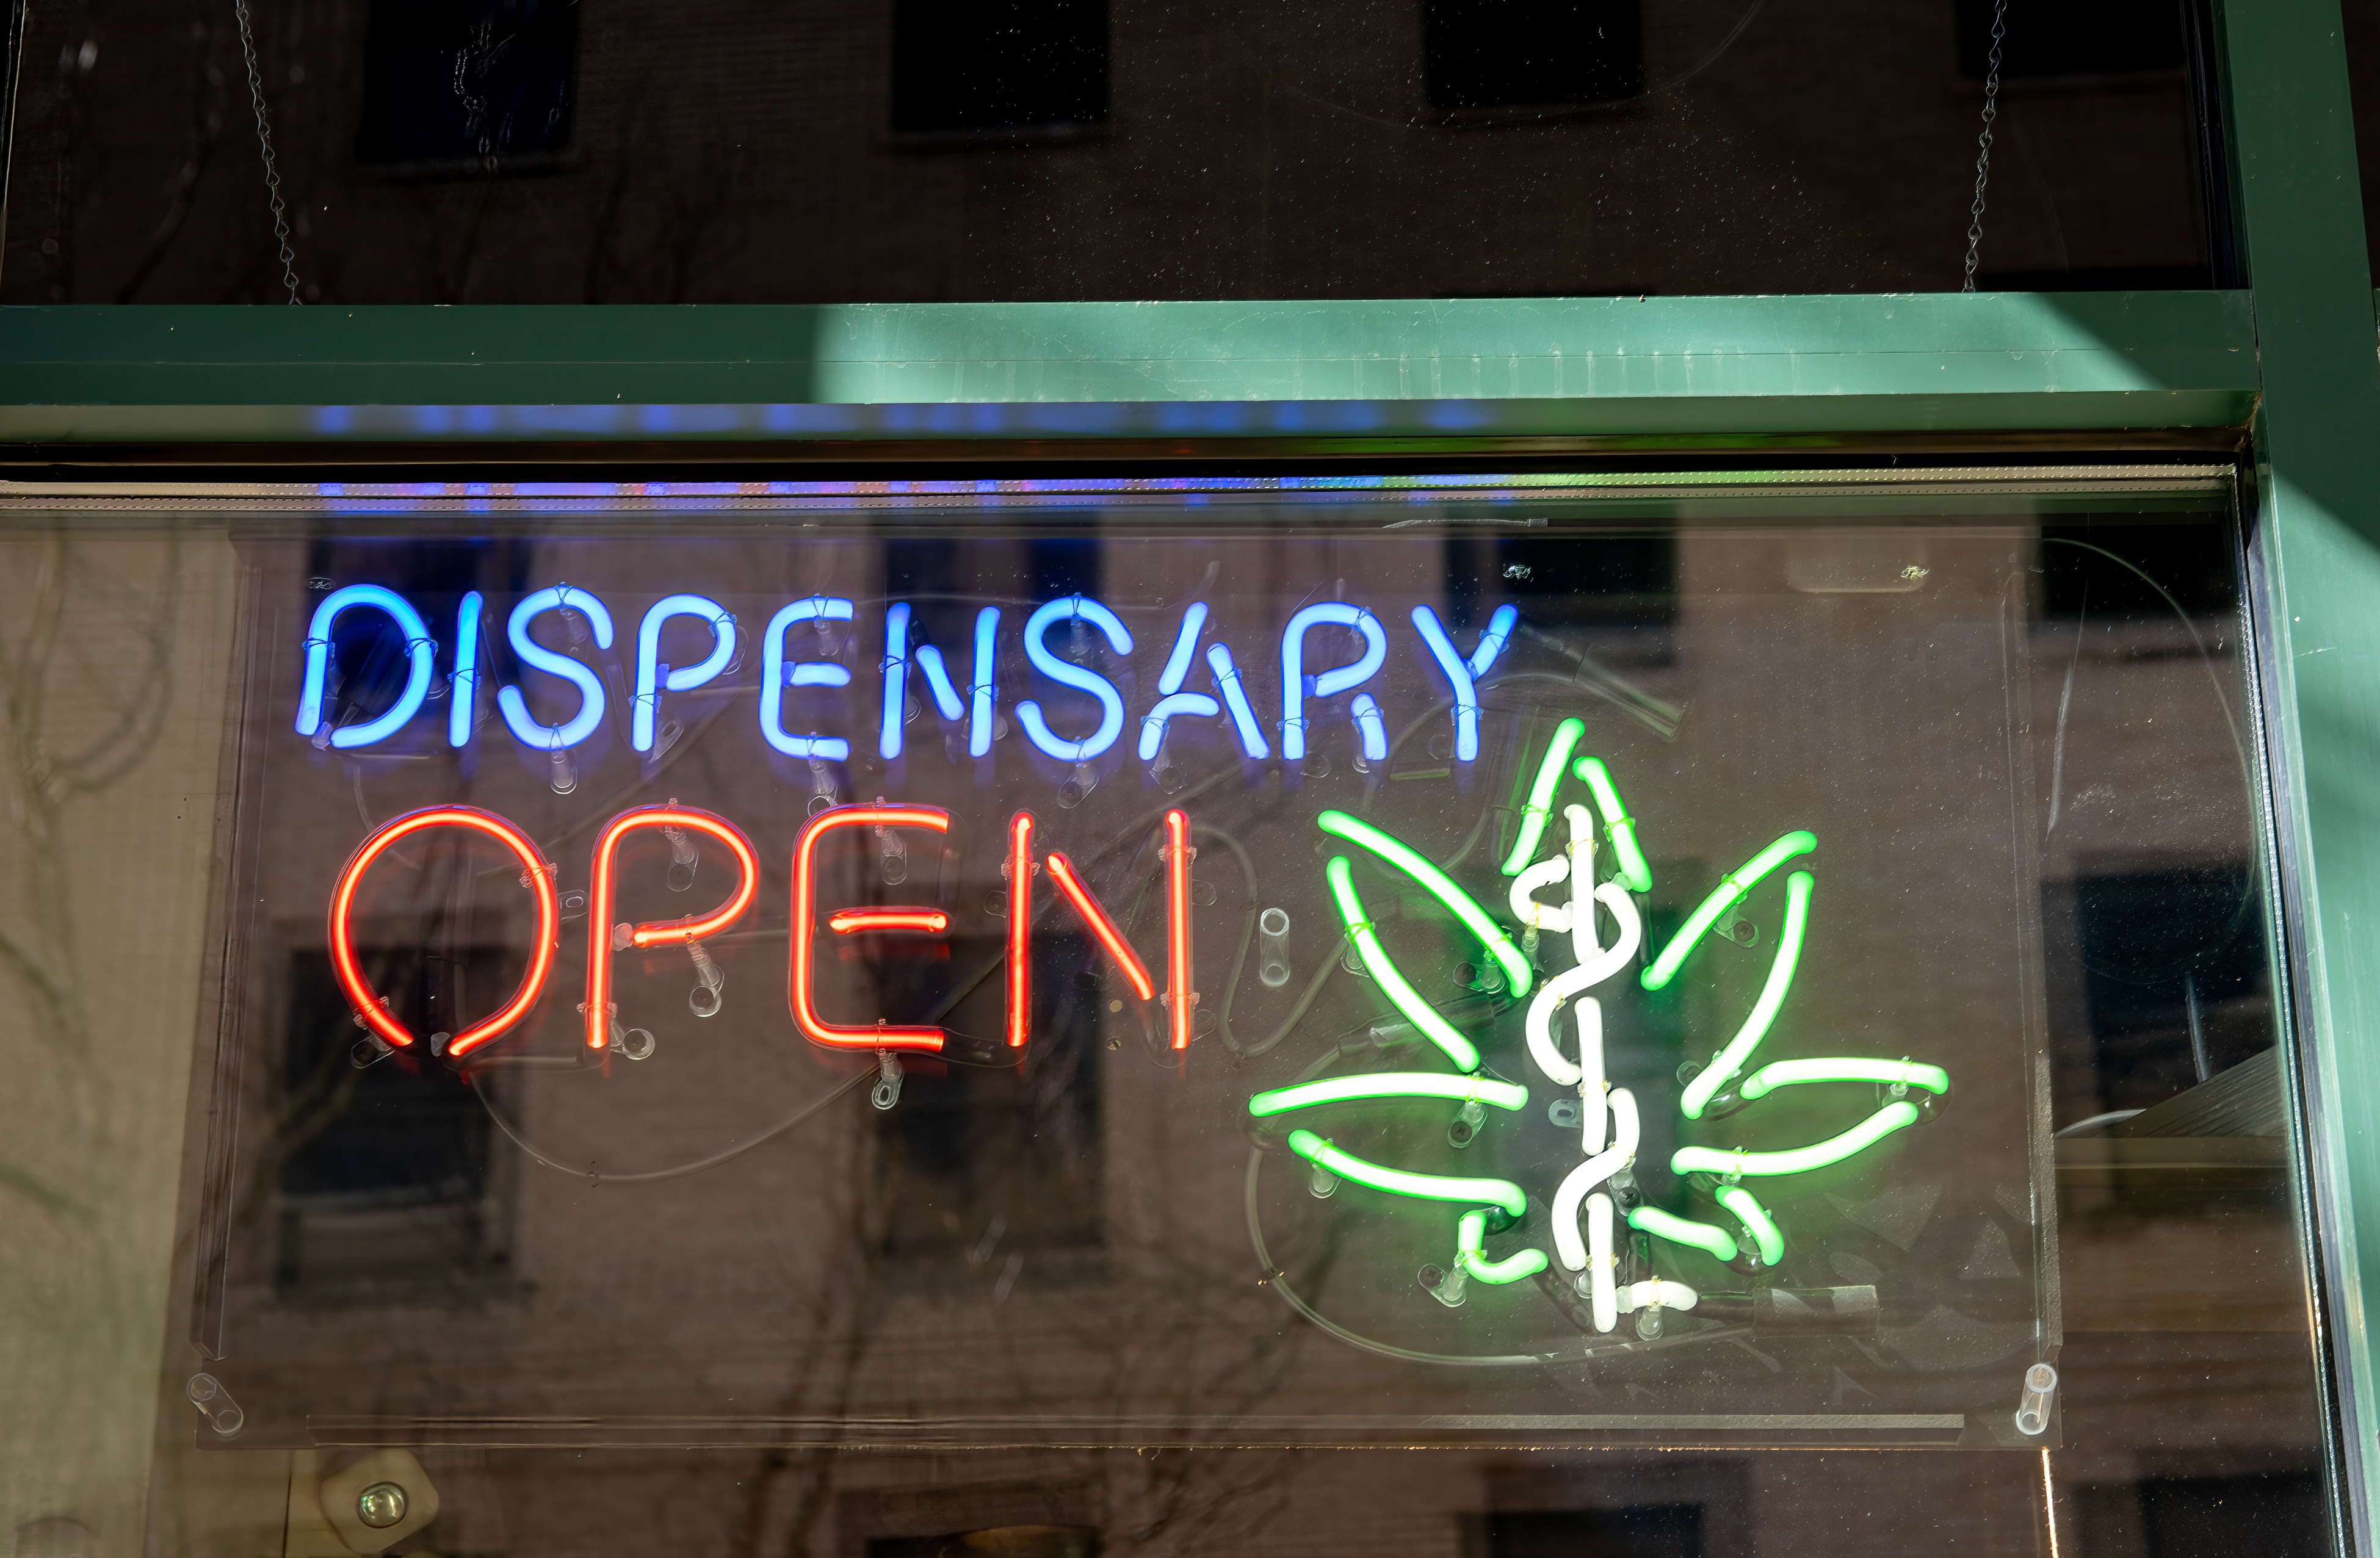 Neon sign advertising legal, medical marijuana dispensary in store window